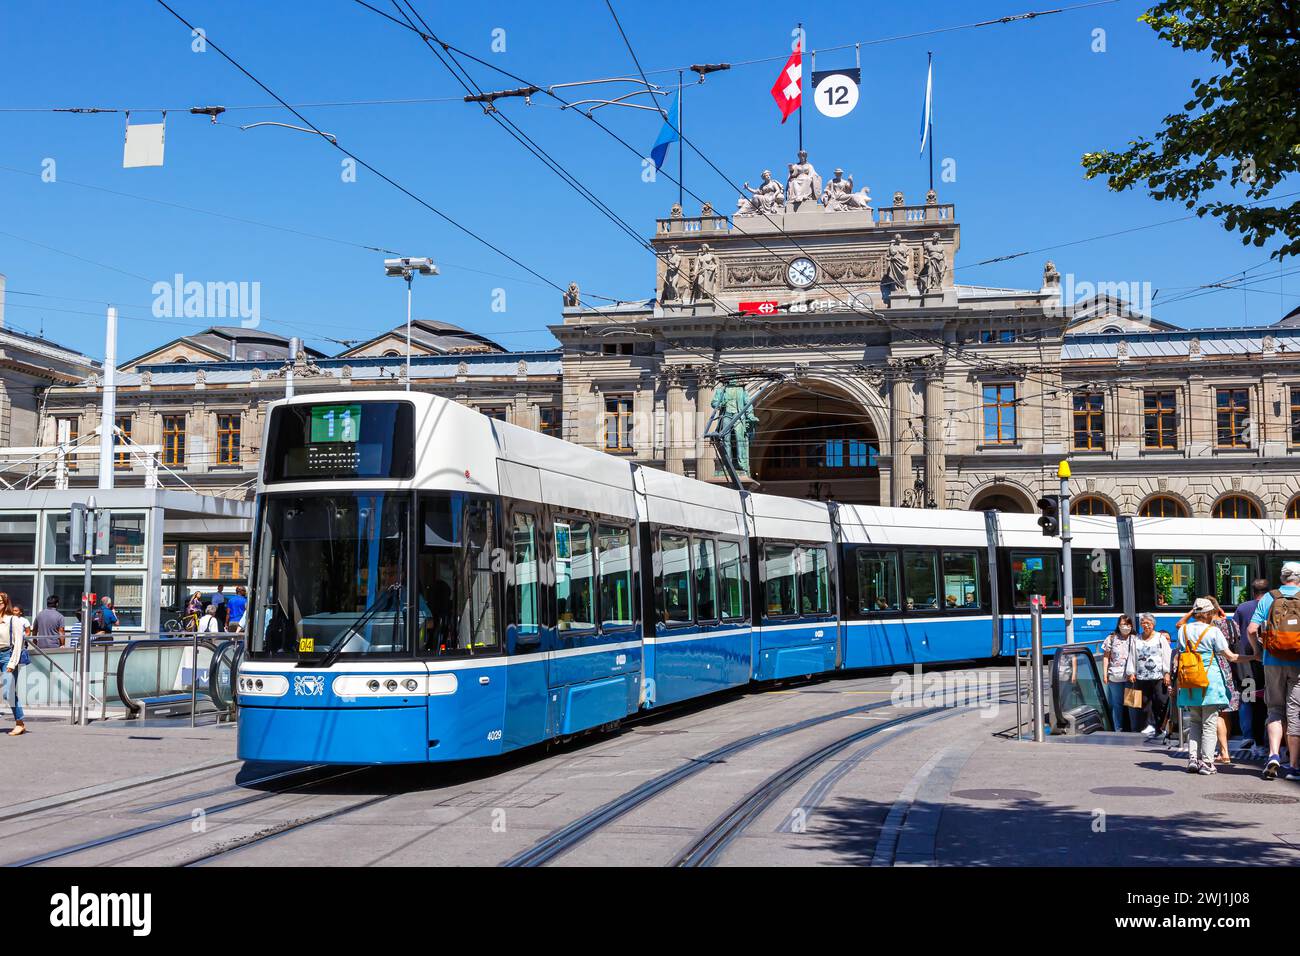 Bahnhofstrasse with Bombardier Flexity 2 streetcar Public transportation in Zurich, Switzerland Stock Photo